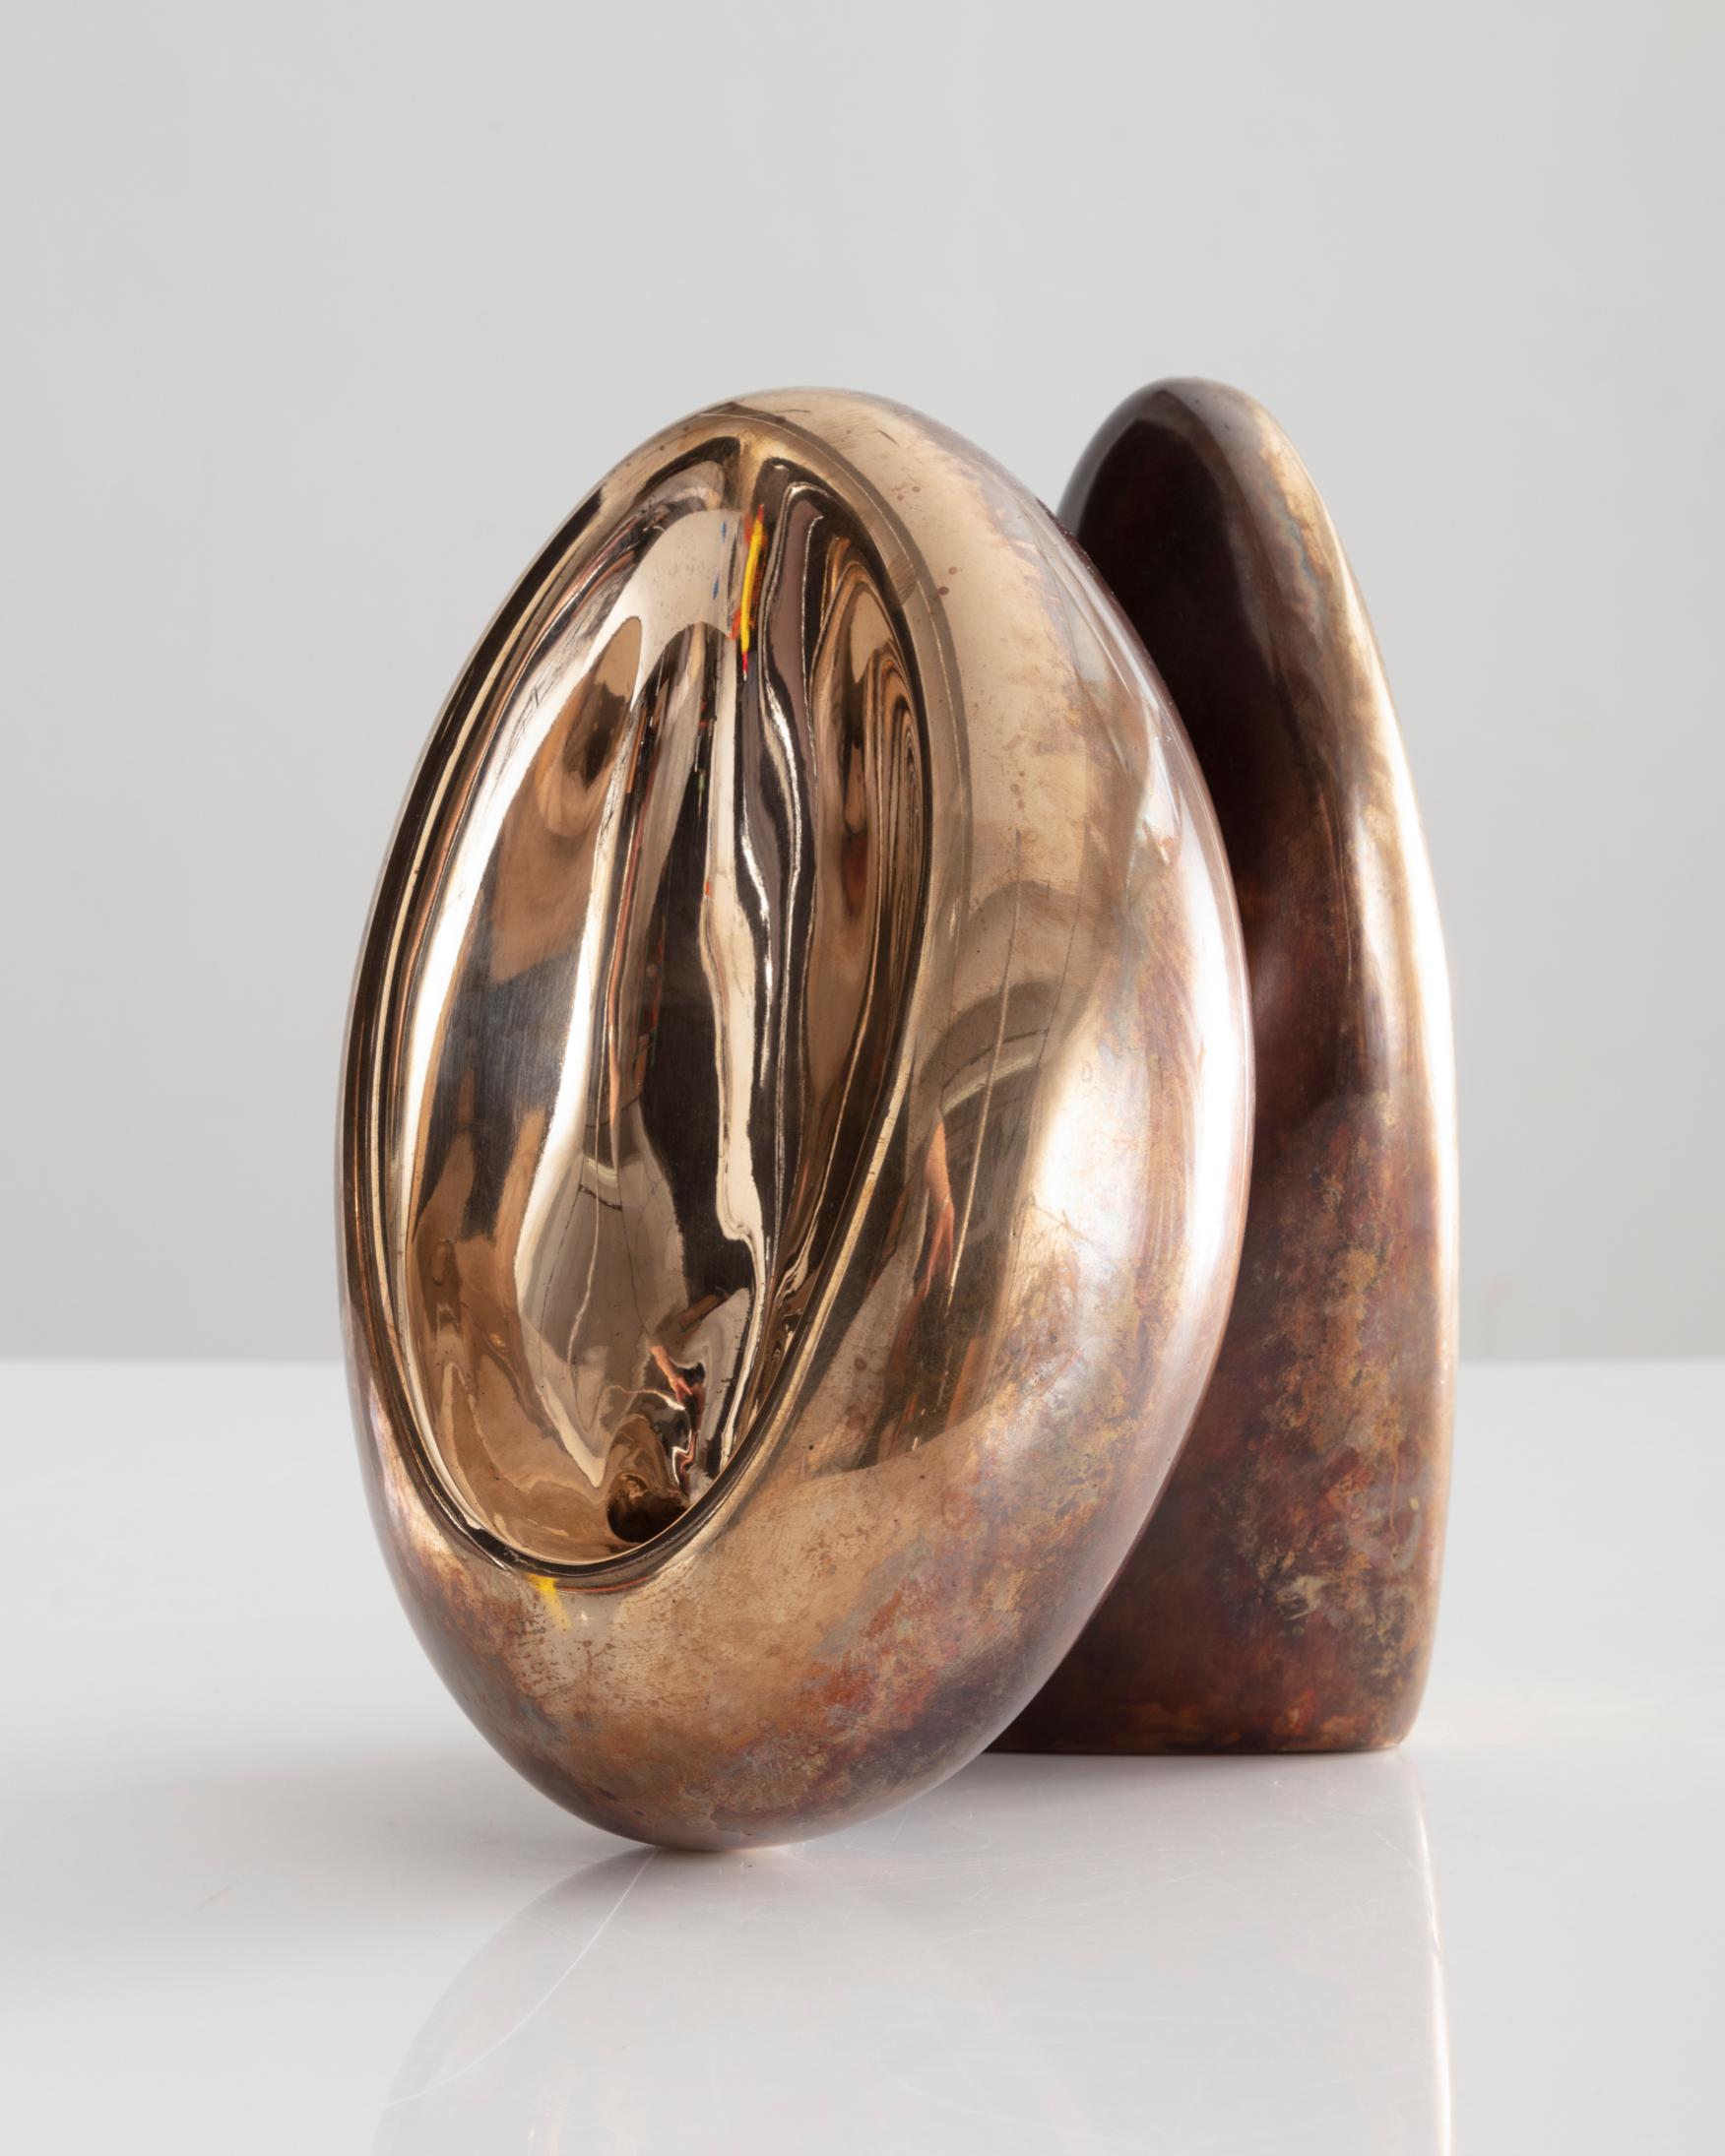 Modern Fertility Form Double Candleholder in Bronze by Rogan Gregory, 2018